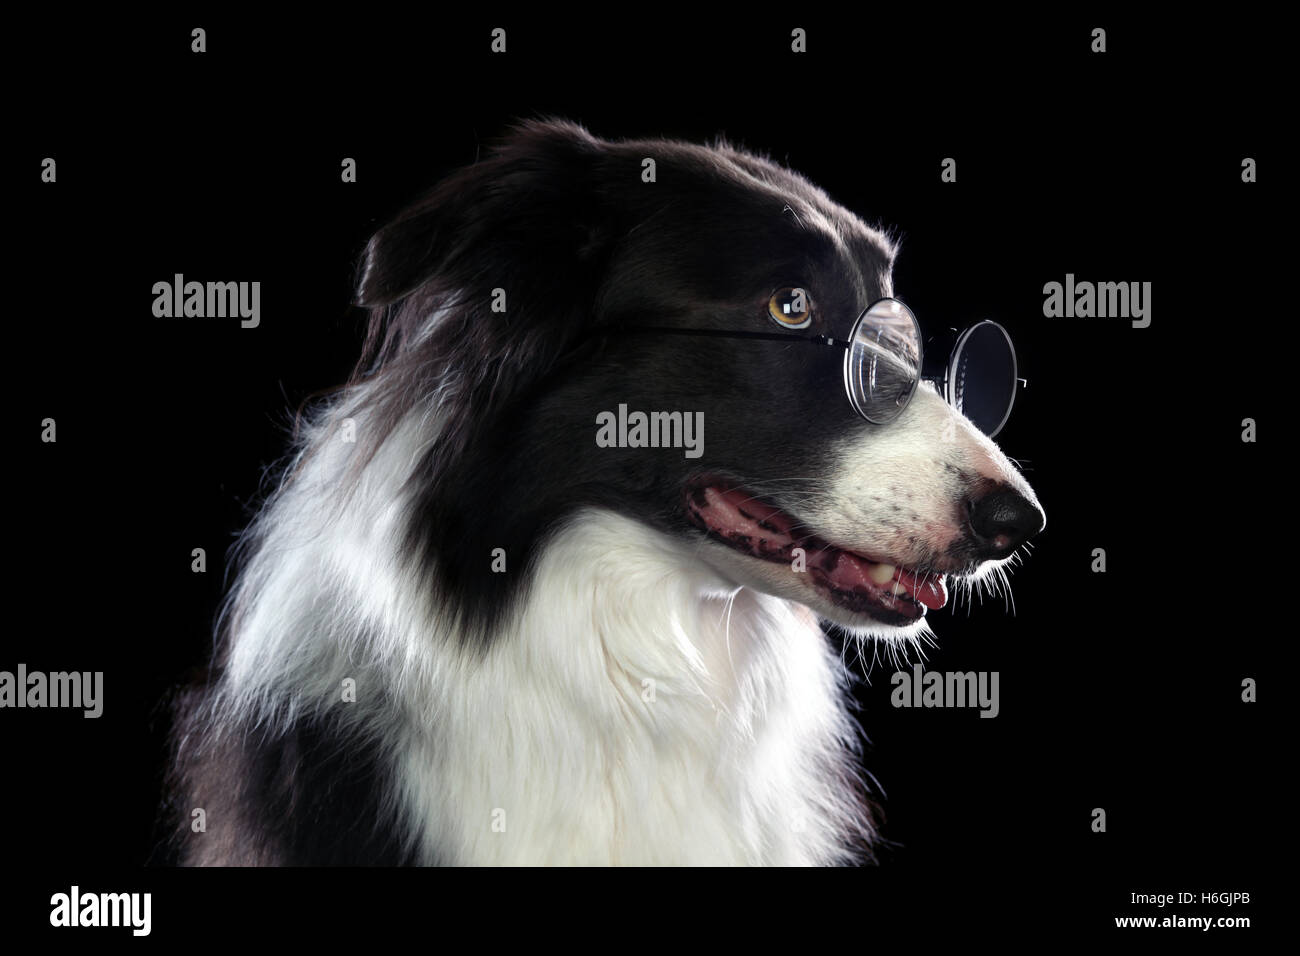 Smart border collie dog wearing glasses Stock Photo